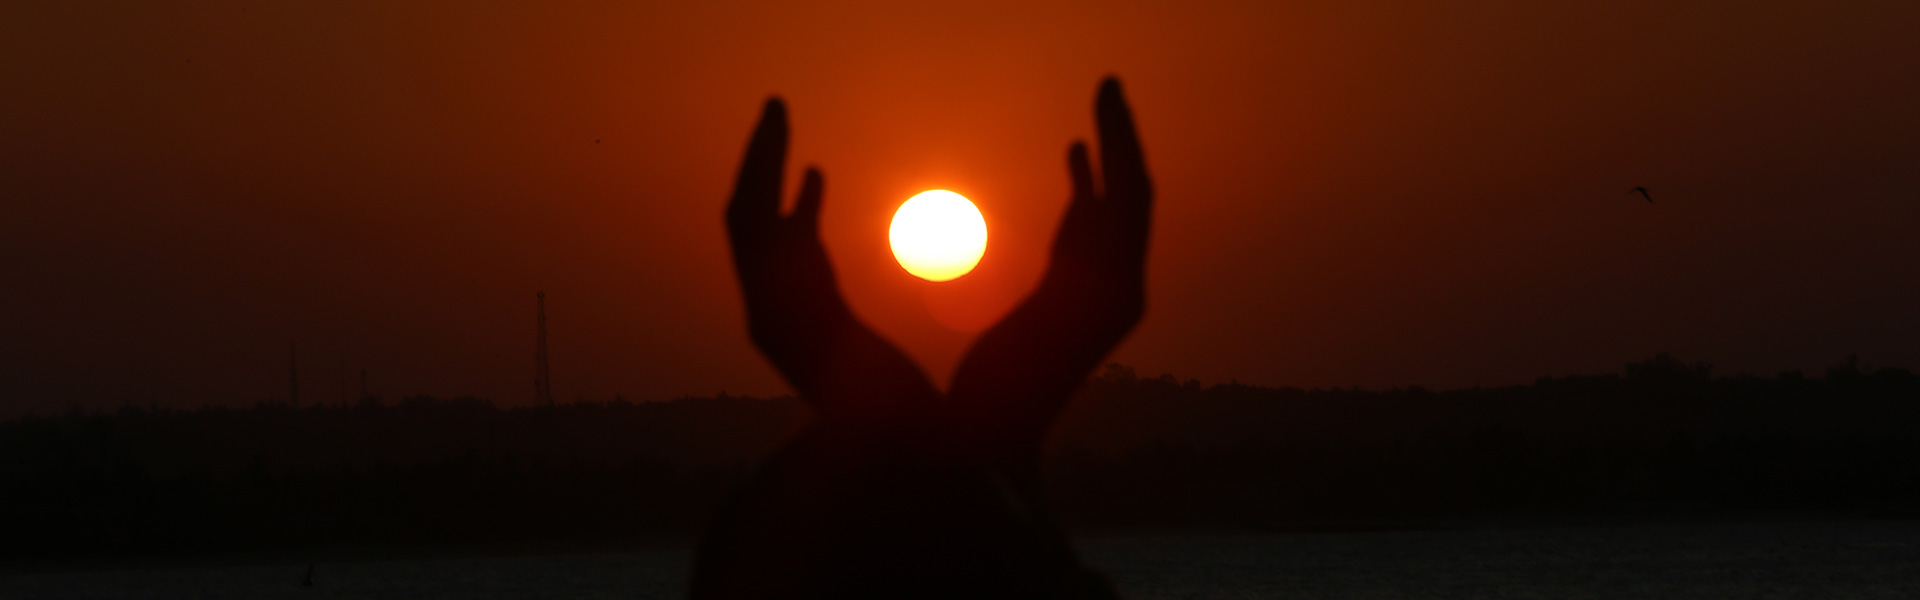 tanzania-sunset-hands-photo_mohammed_abdu